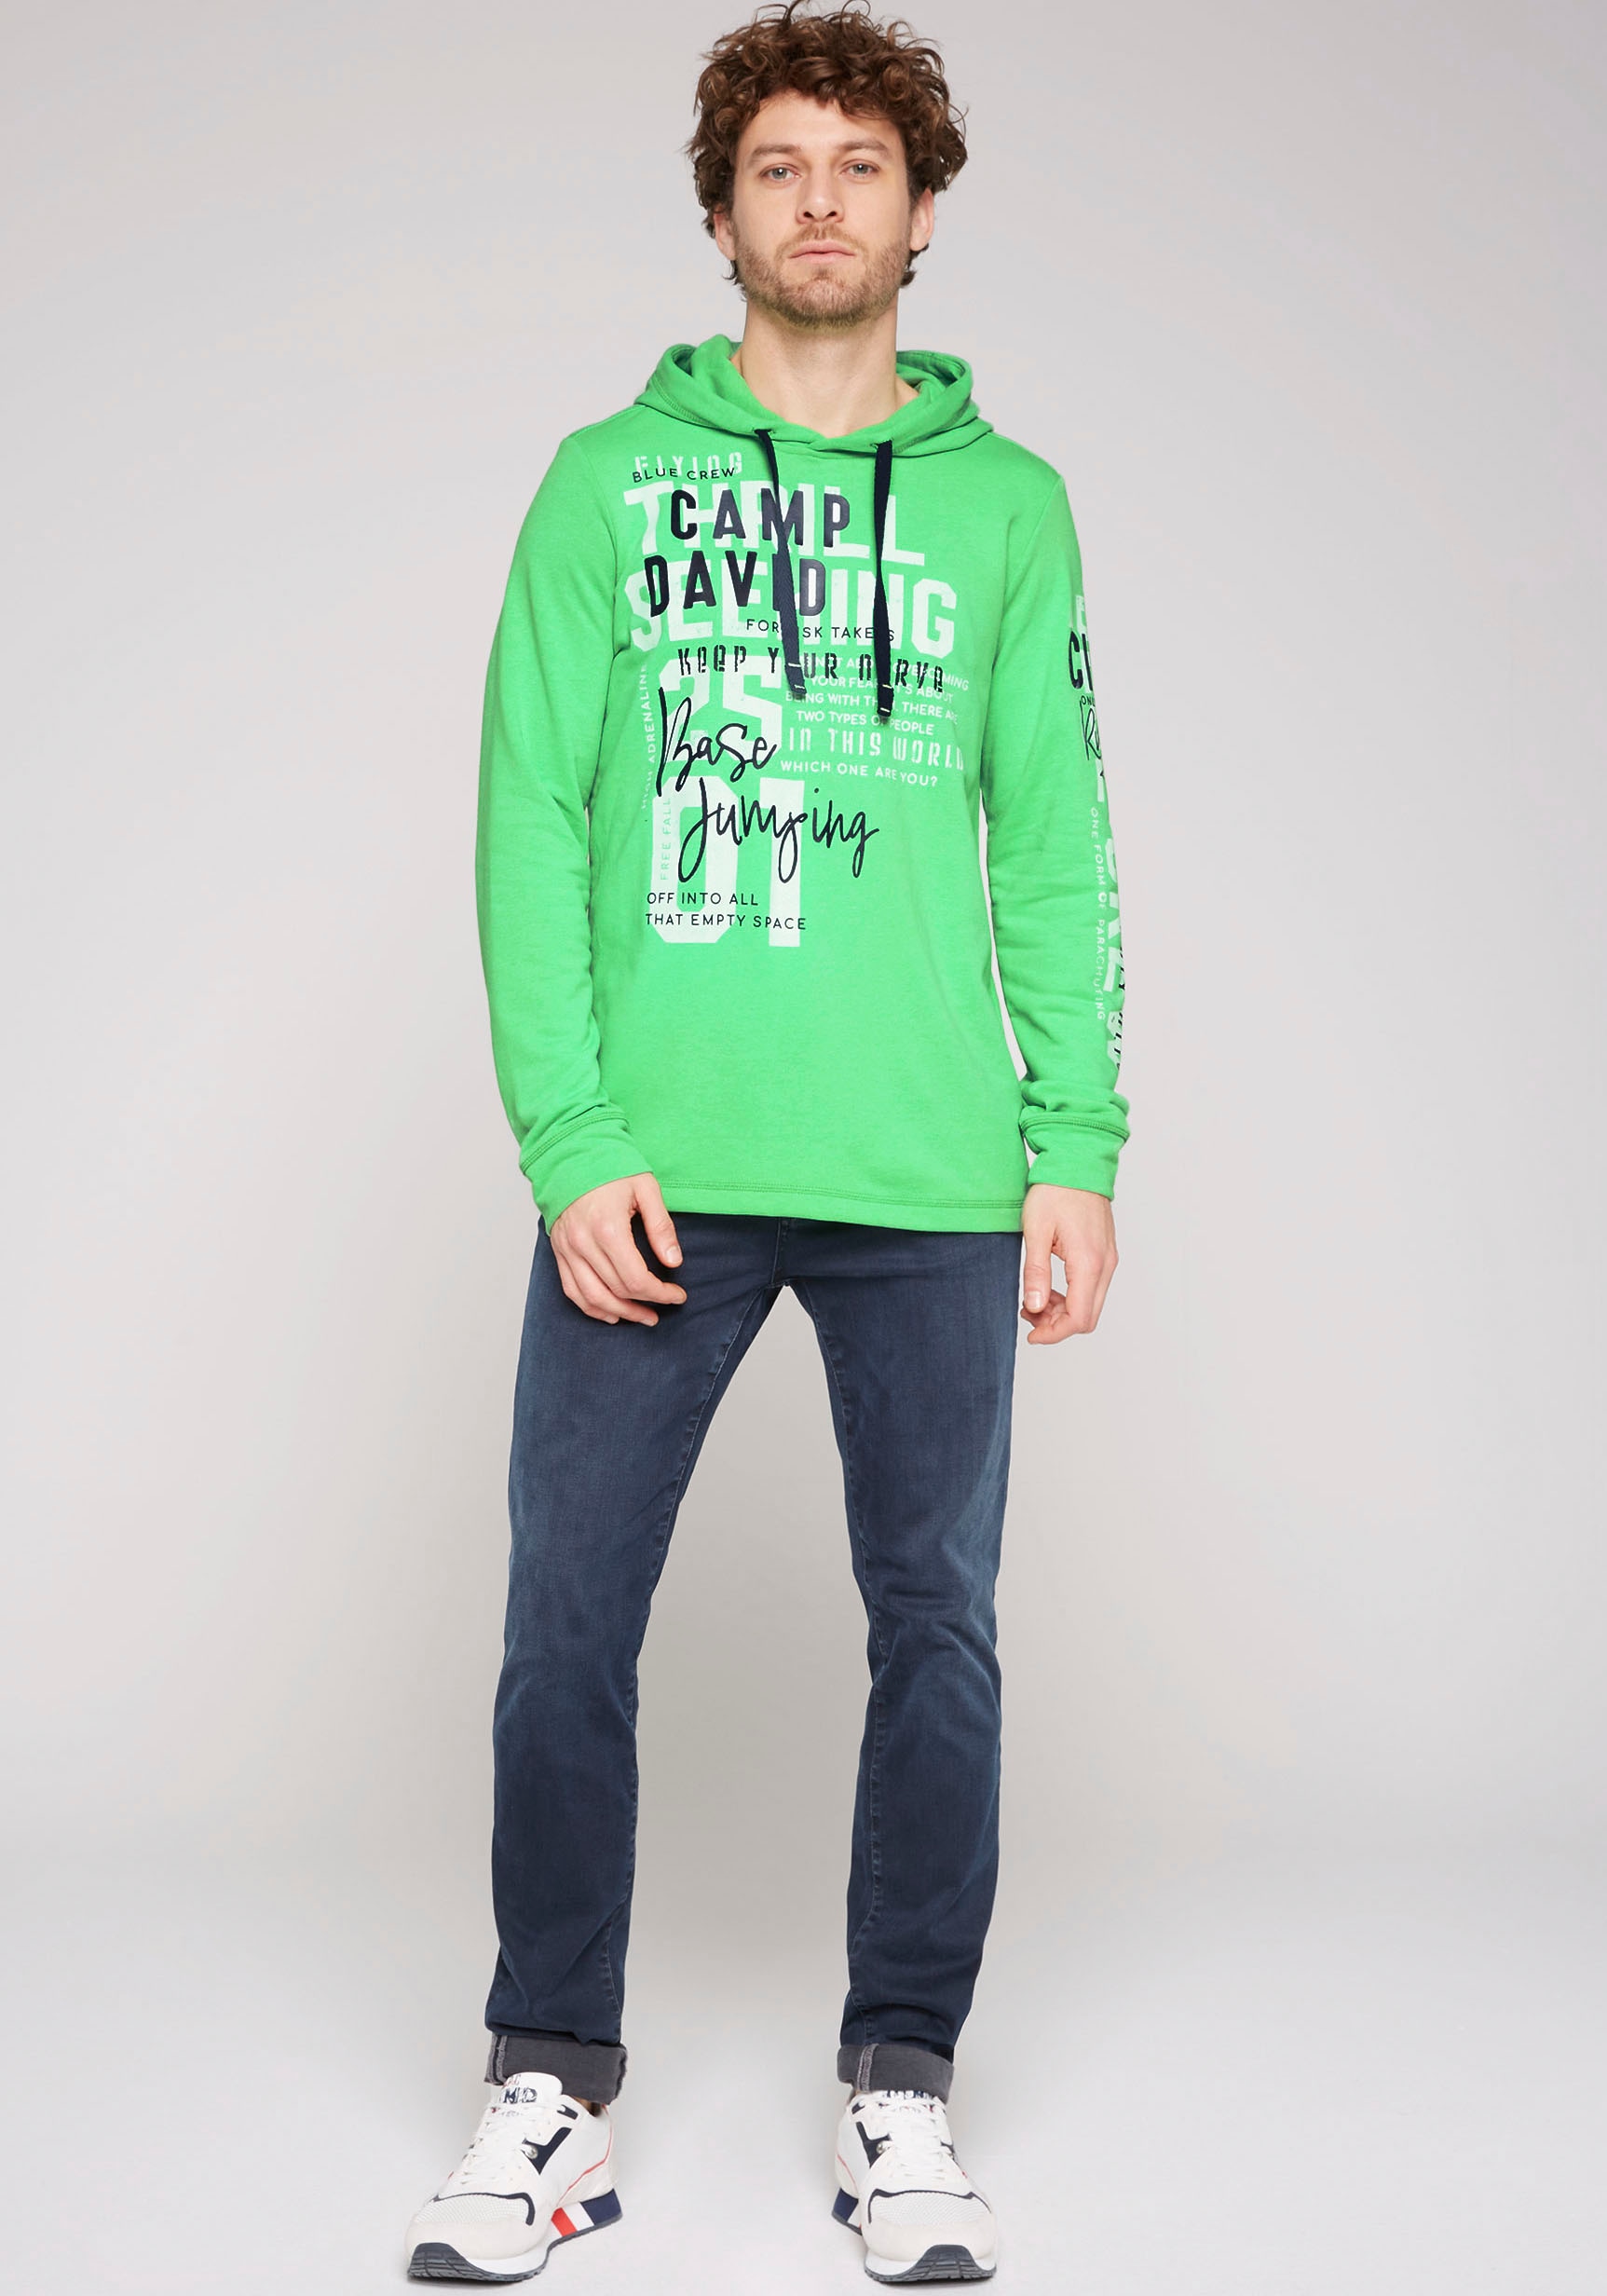 Patch DAVID Kapuze kaufen ▷ Label der an Kapuzensweatshirt, | mit CAMP BAUR